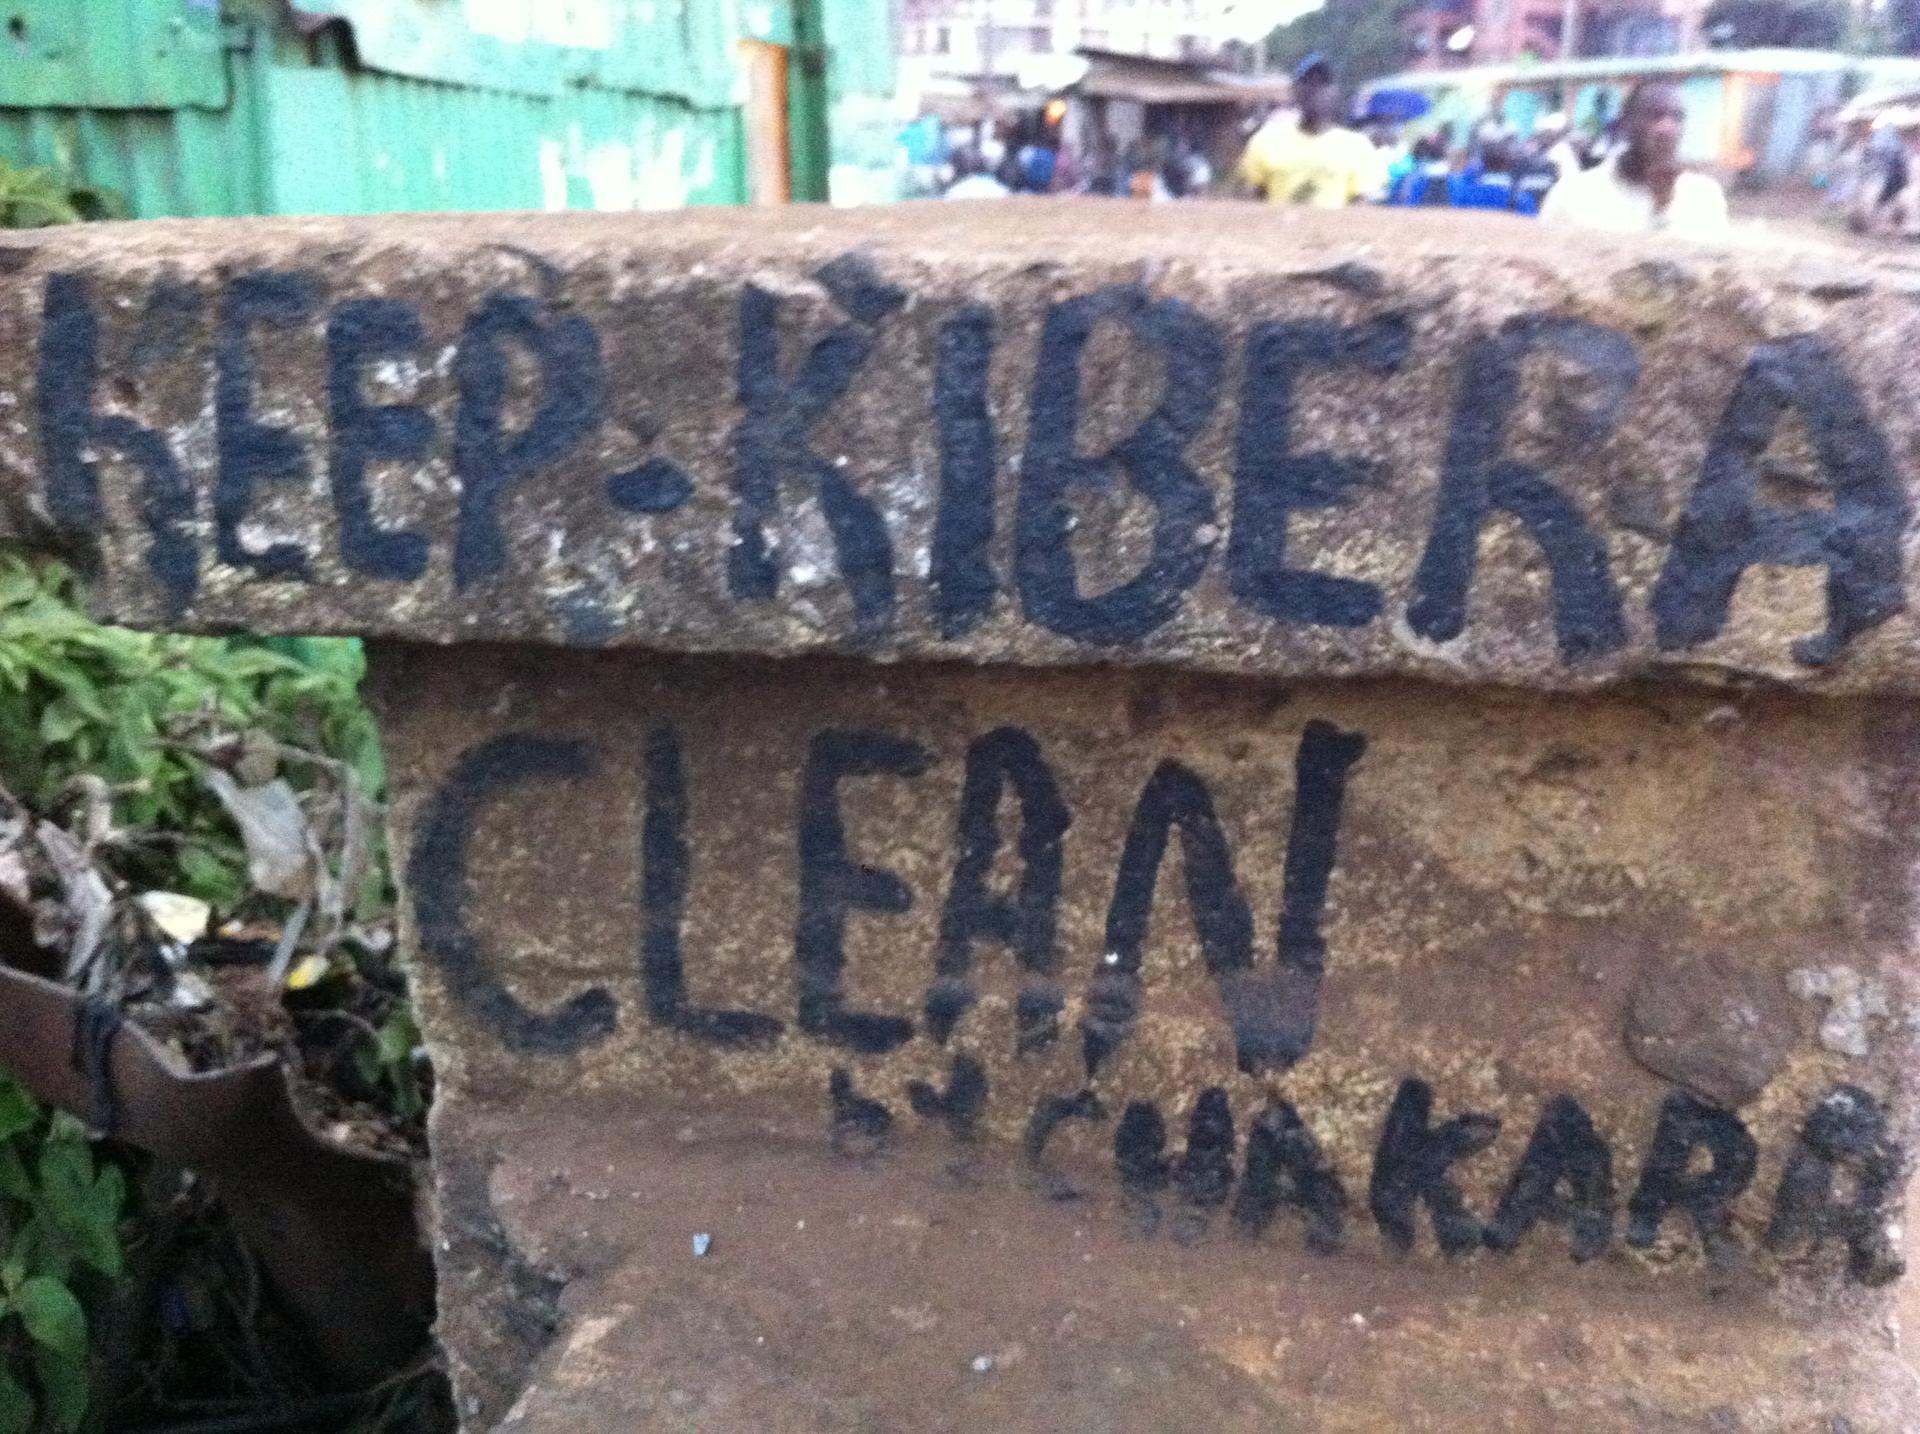 Keep Kibera Clean